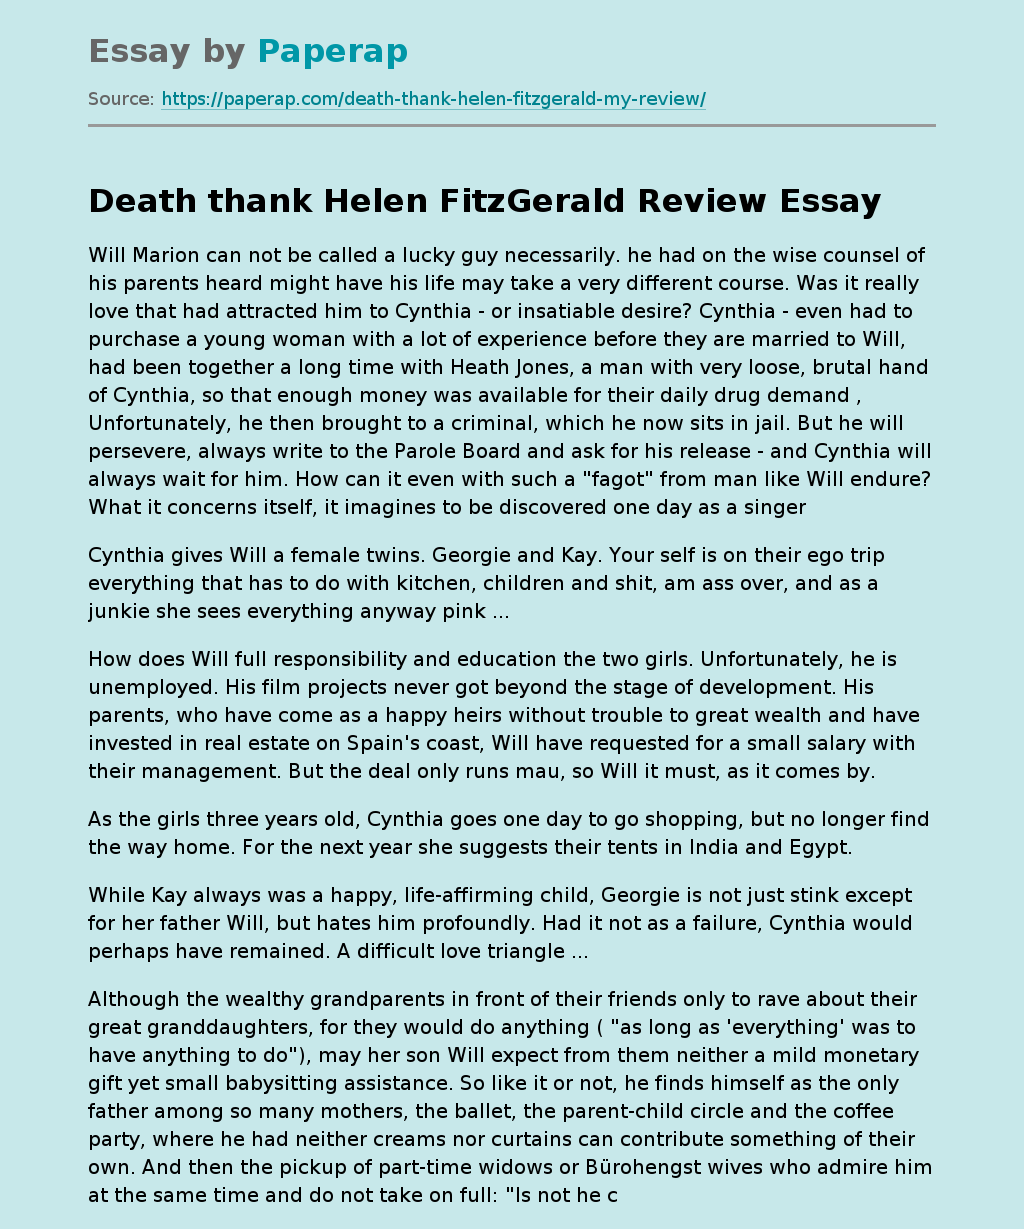 "Death thank" by Helen FitzGerald